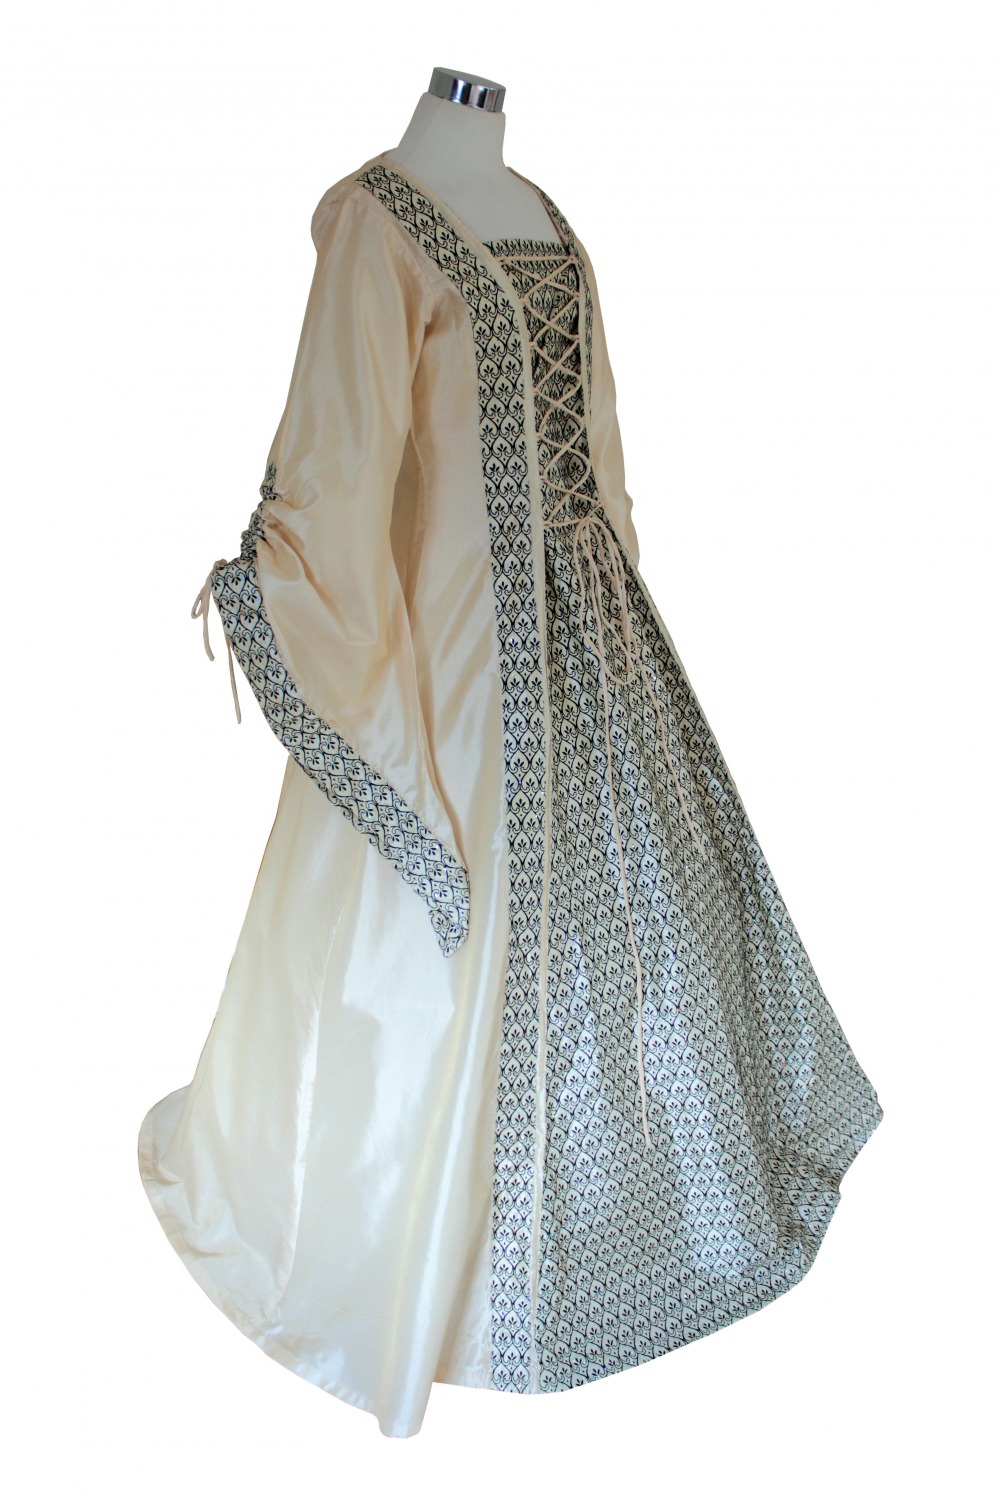 Ladies Medieval Renaissance Tudor Costume Size 14 - 16 Image